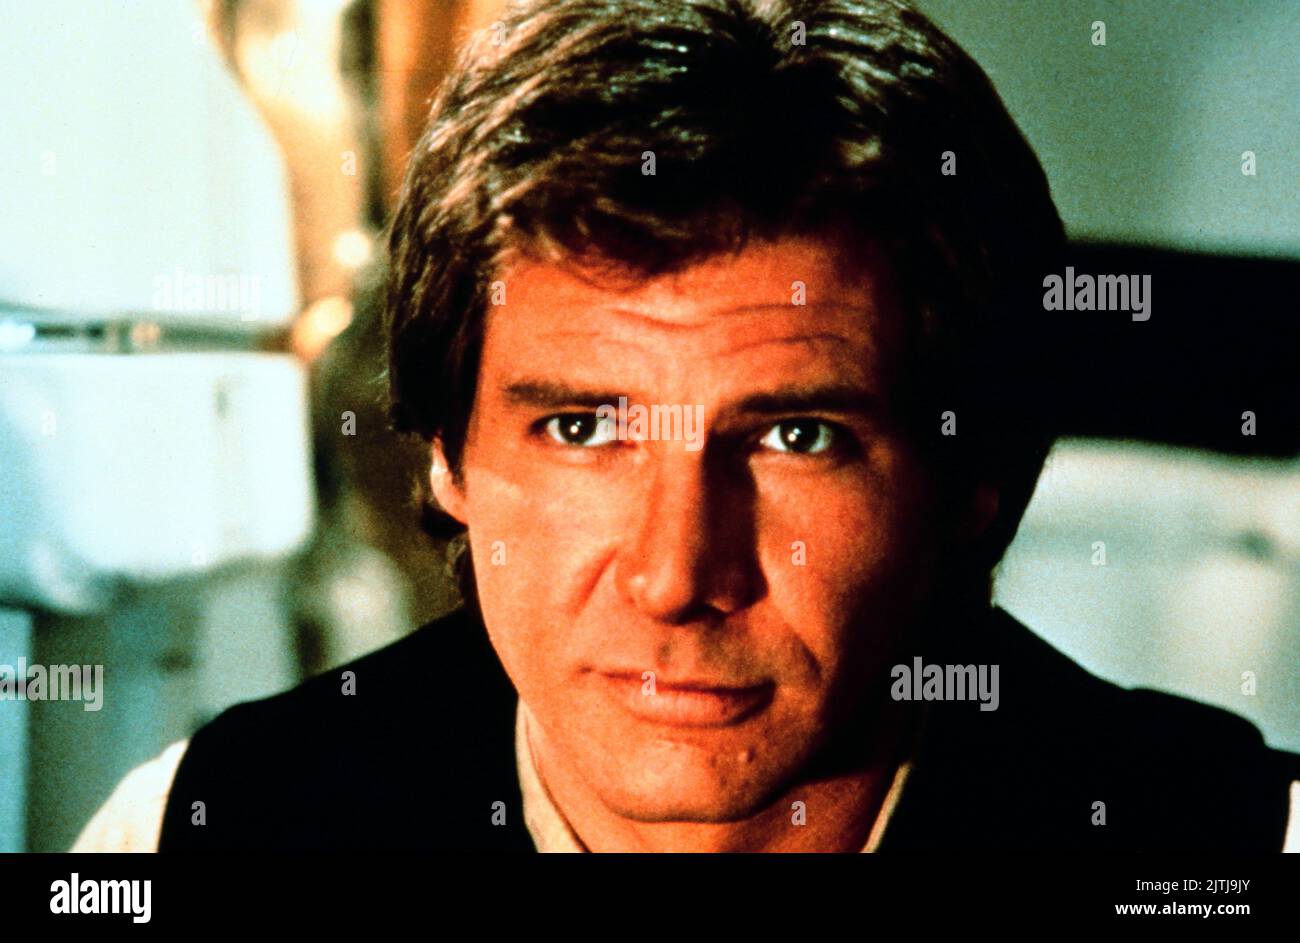 Star Wars, alias Krieg der Sterne, EE.UU. 1977, Región: George Lucas, Darsteller: Harrison Ford als Han Solo Foto de stock